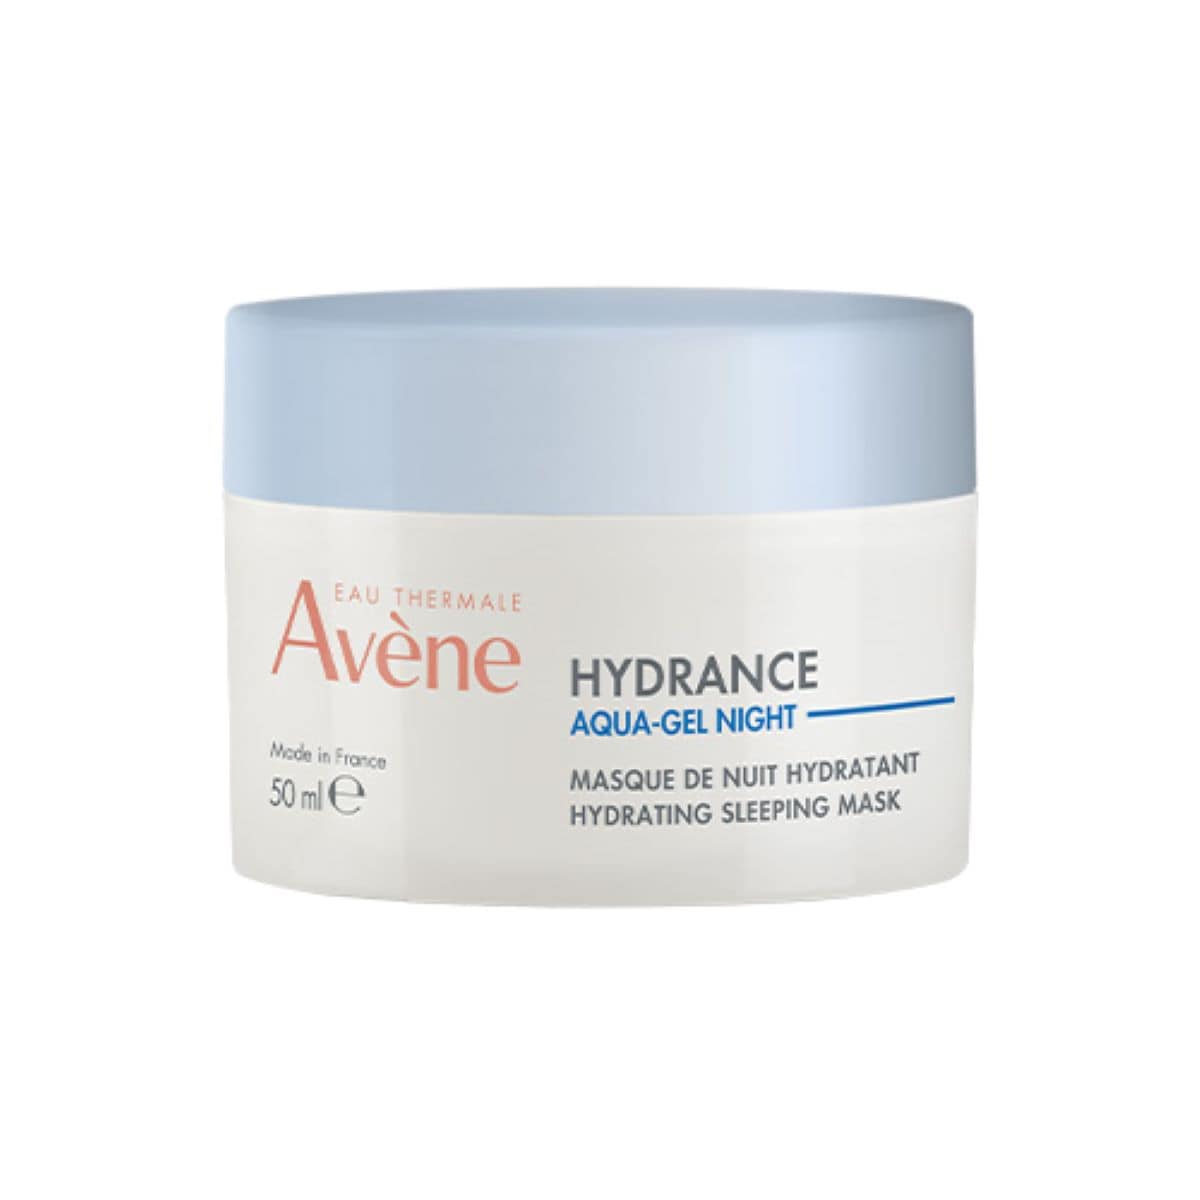 Avene Hydrance Hydrating Sleeping Mask 50ml